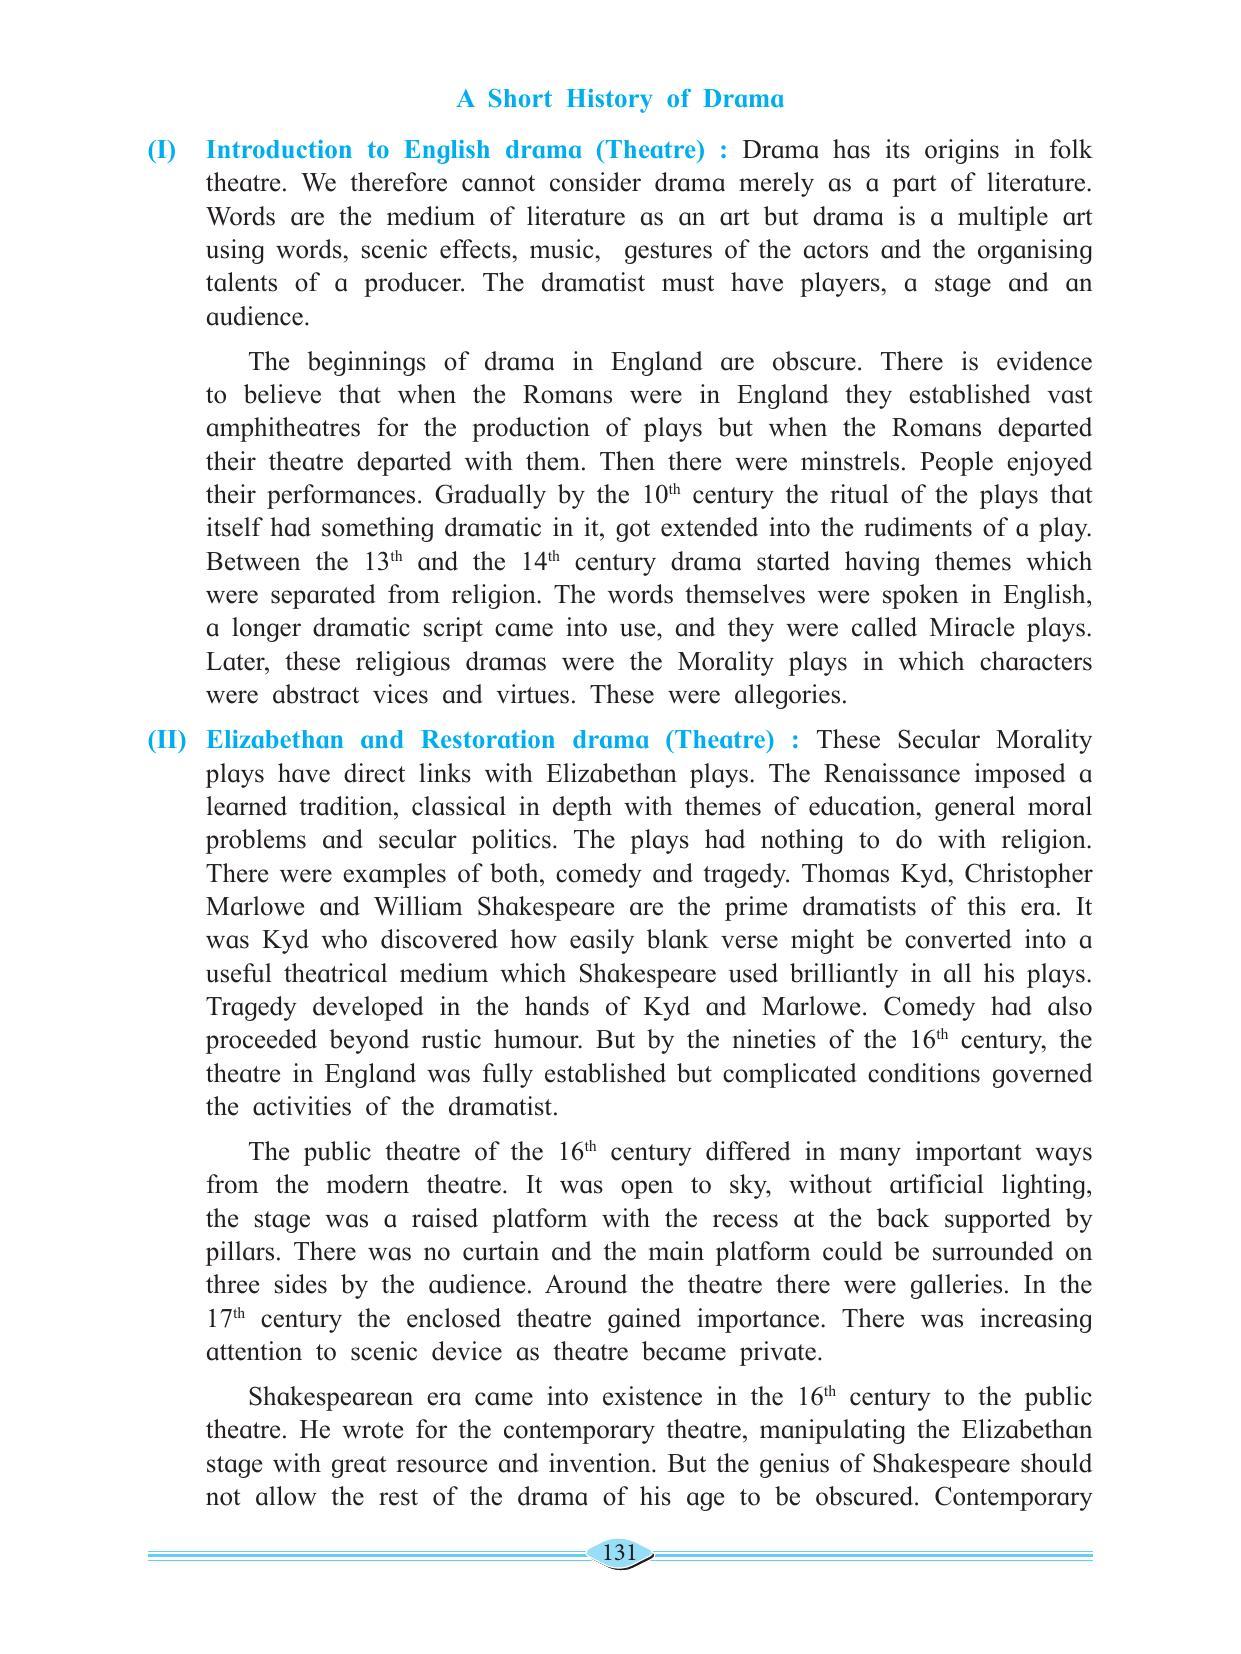 Maharashtra Board Class 11 English Textbook - Page 145